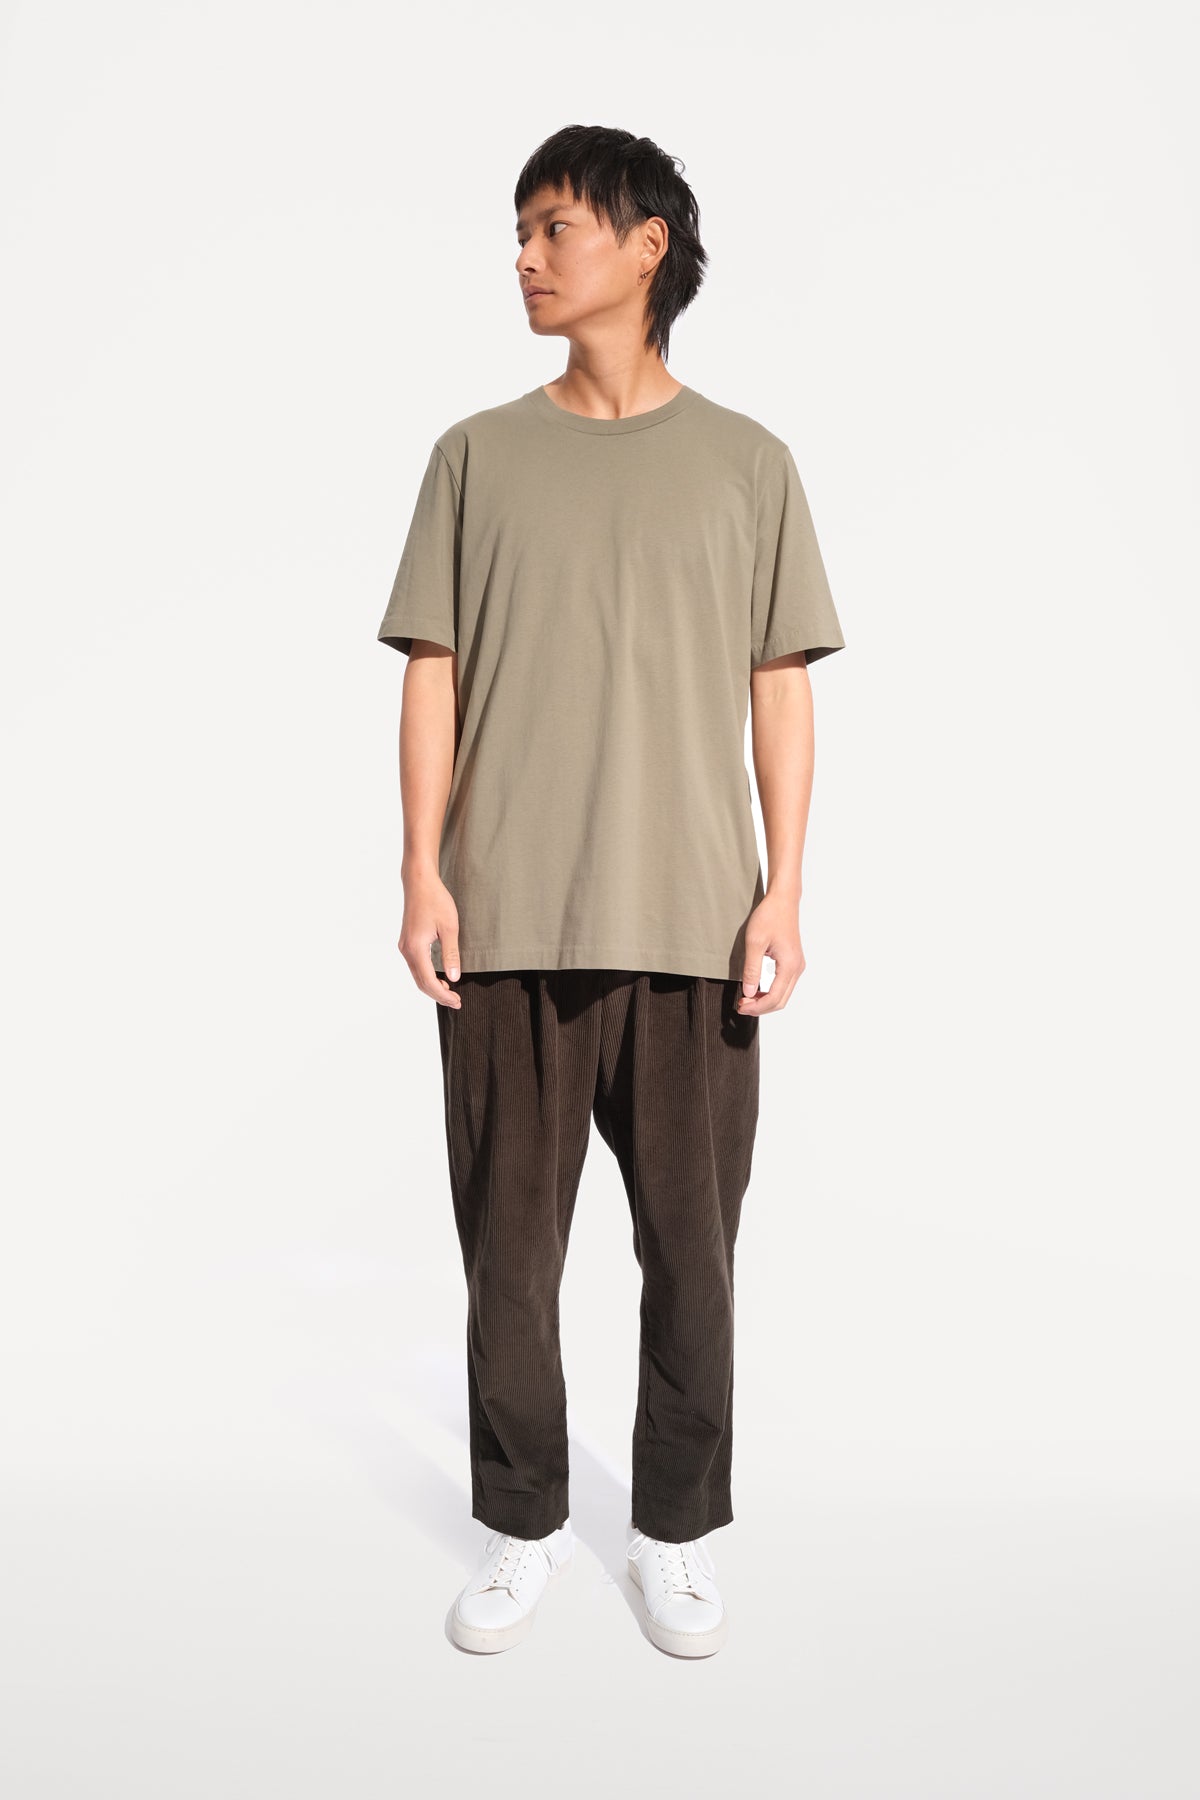 oftt - 01 - perfect fit t-shirt - sage - organic cotton - image 1